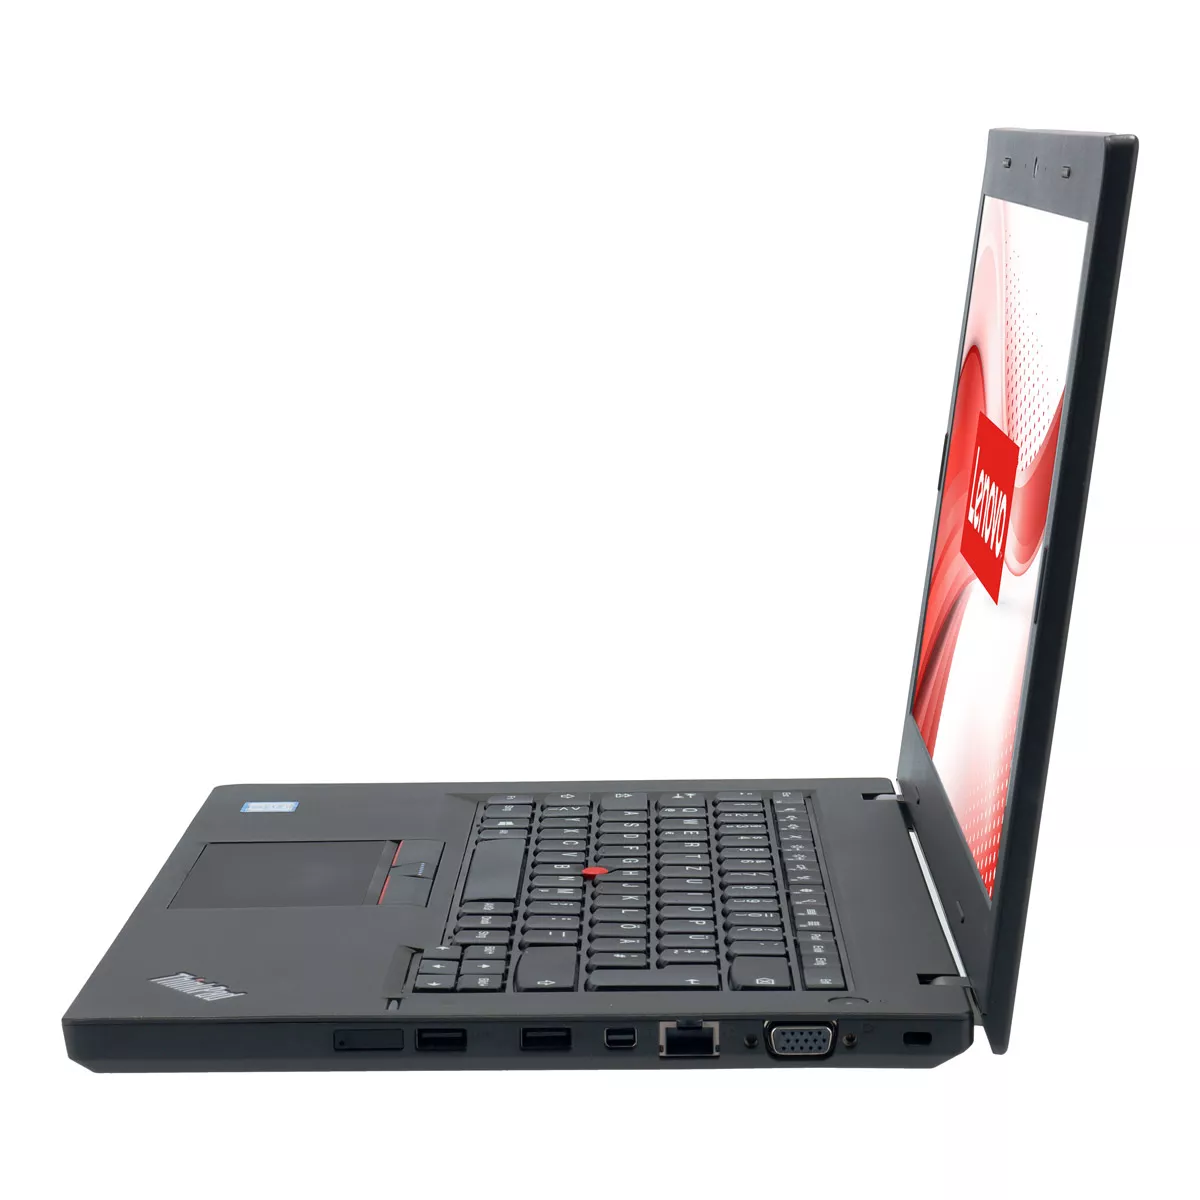 Lenovo ThinkPad L460 Core i5 6300U Full-HD 240 GB SSD Webcam B